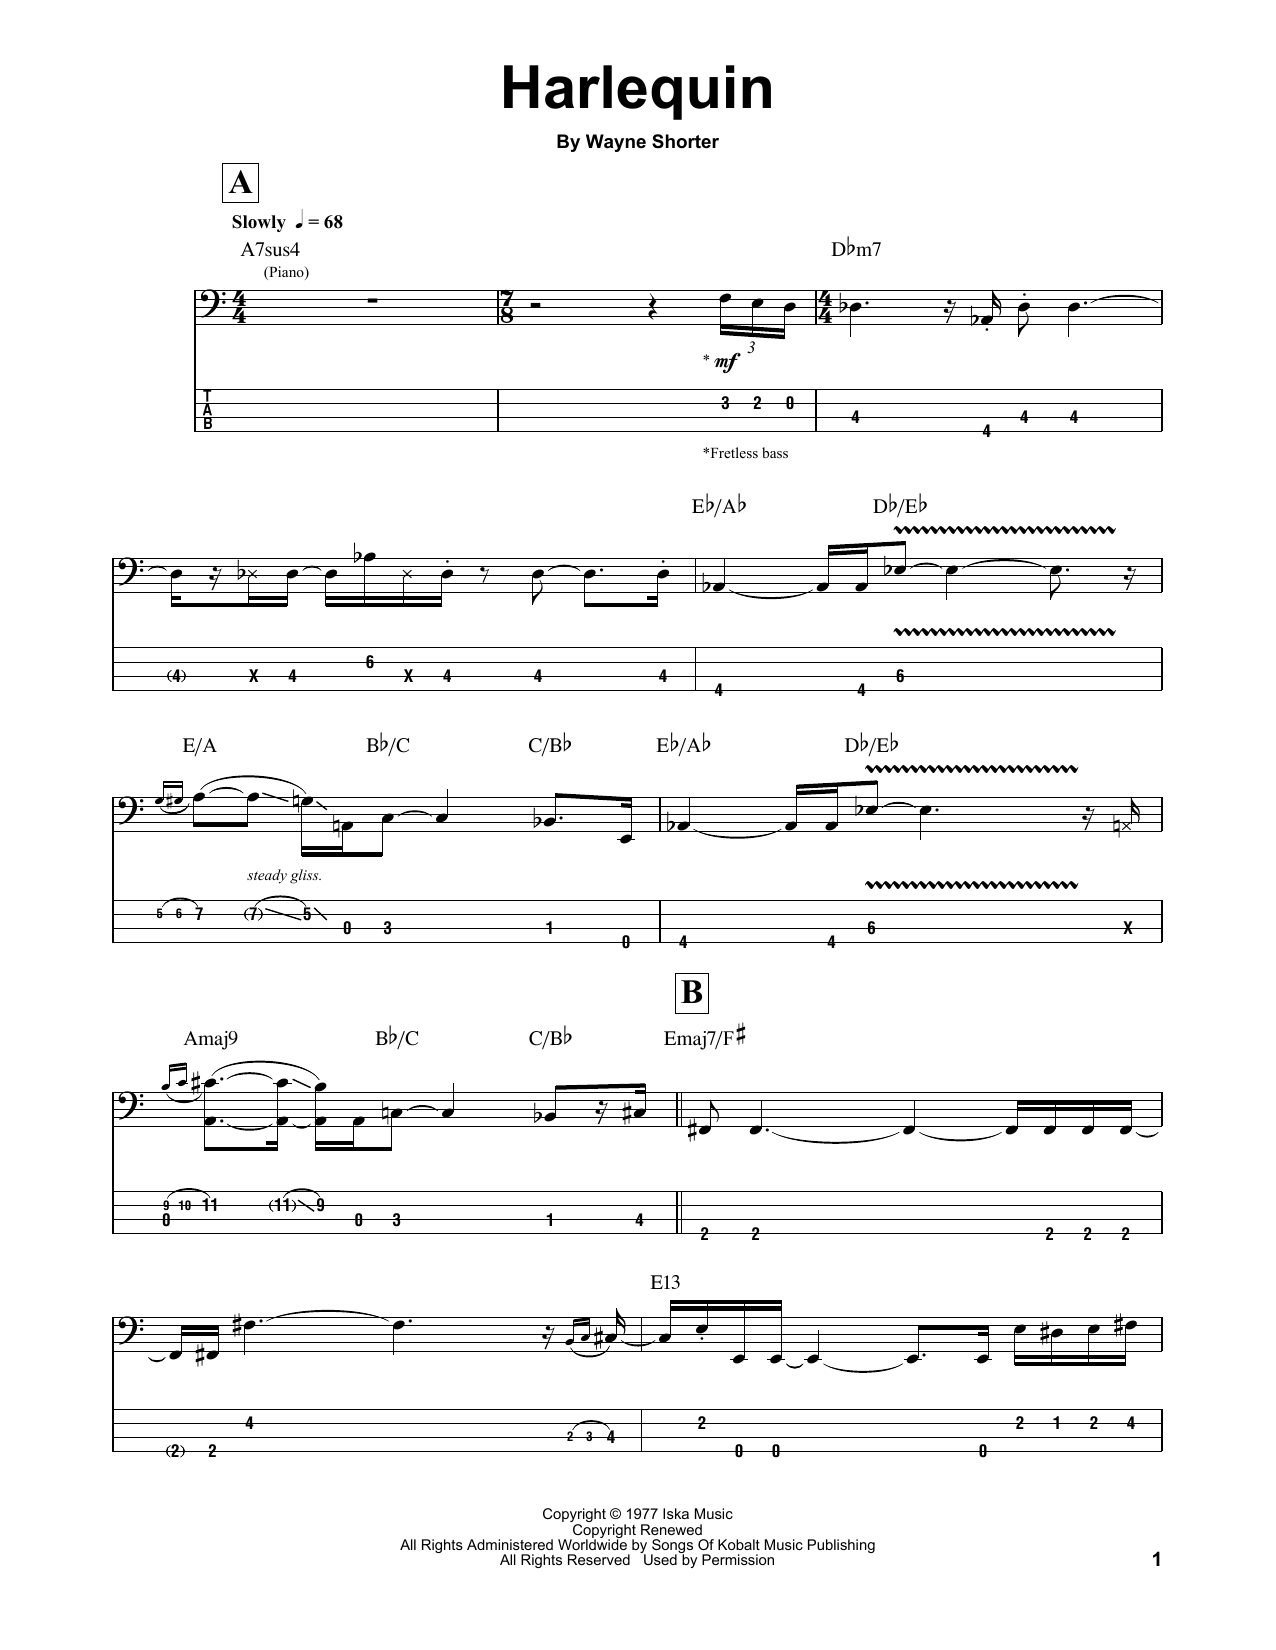 Wayne Shorter Harlequin Sheet Music Notes & Chords for Bass Guitar Tab - Download or Print PDF